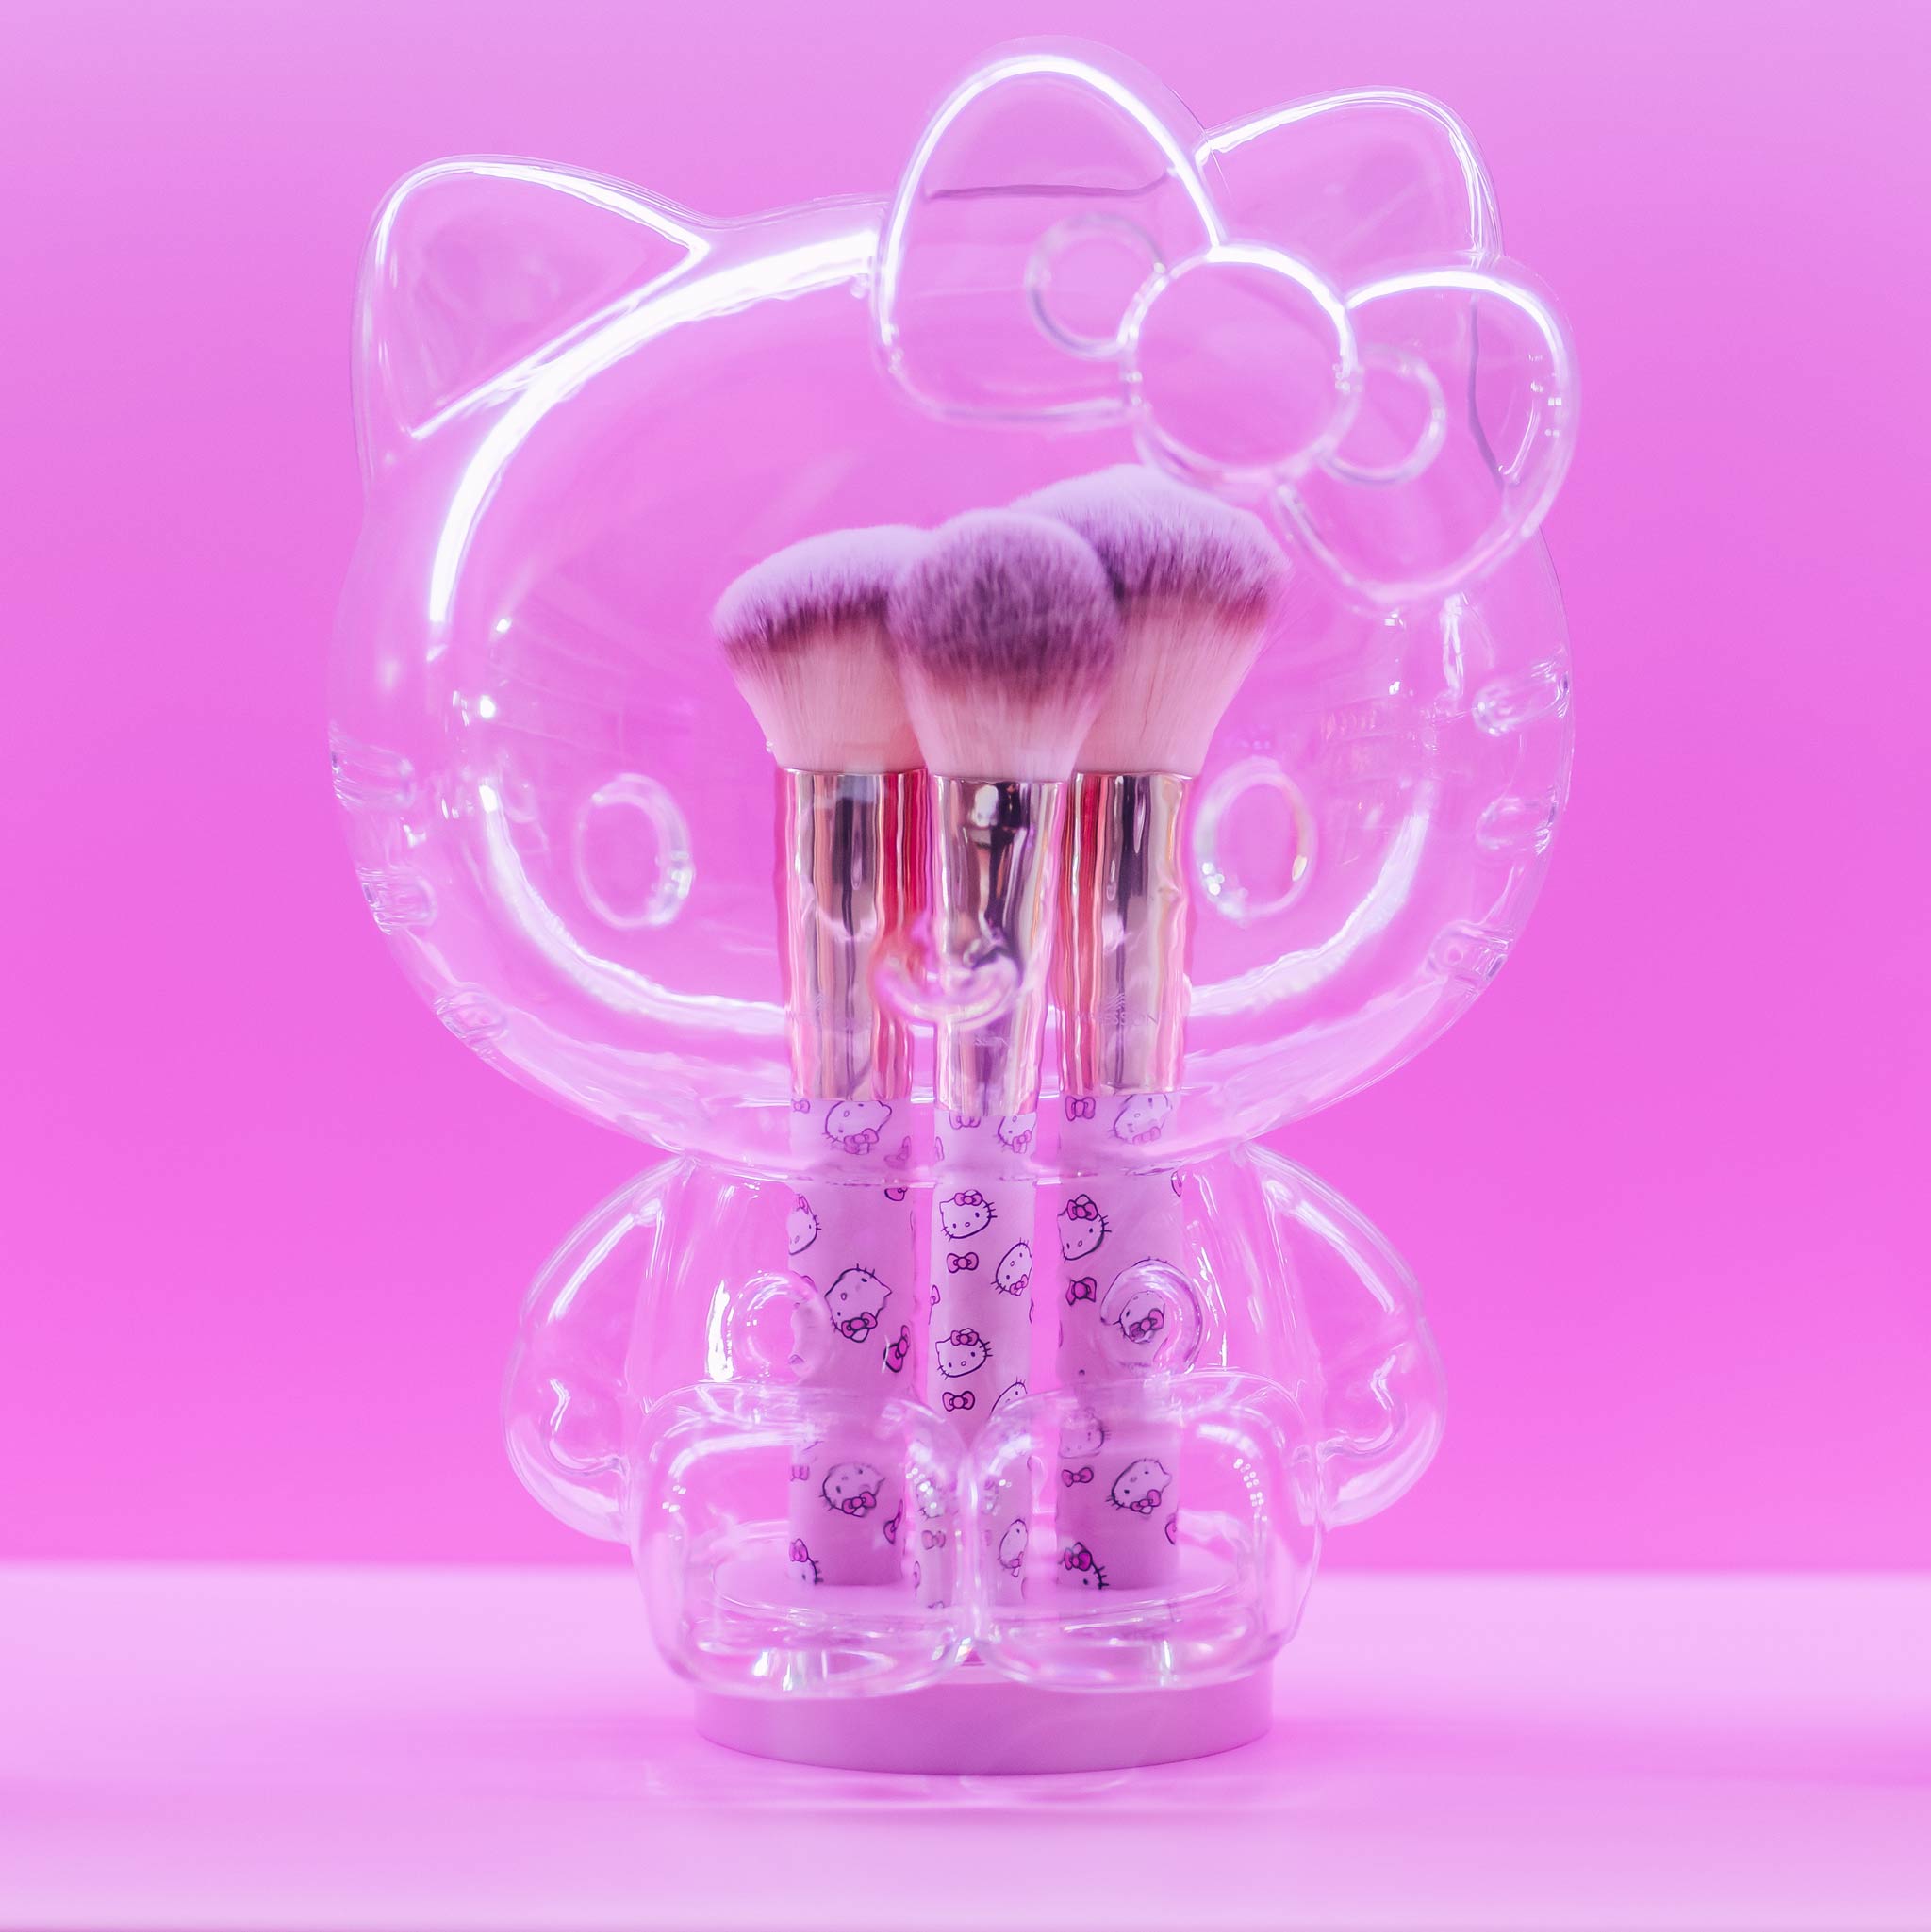 Impressions Vanity Hello Kitty Supercute Signature 6 PCs Makeup Brush Set,  Super Cute Soft Makeup Brushes for Foundation, Face Powder, Make up